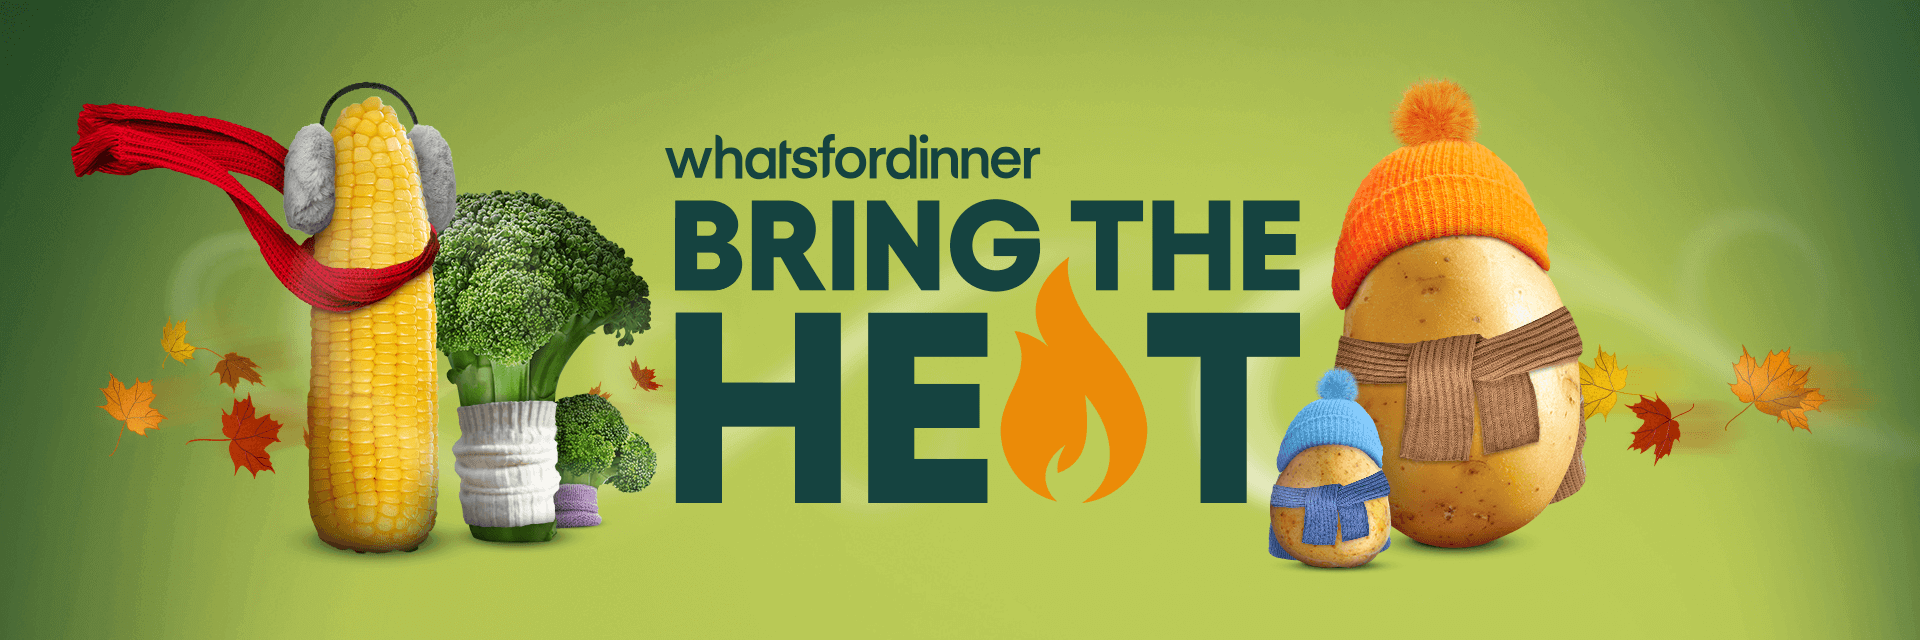 whatsfordinner - Bring the Heat